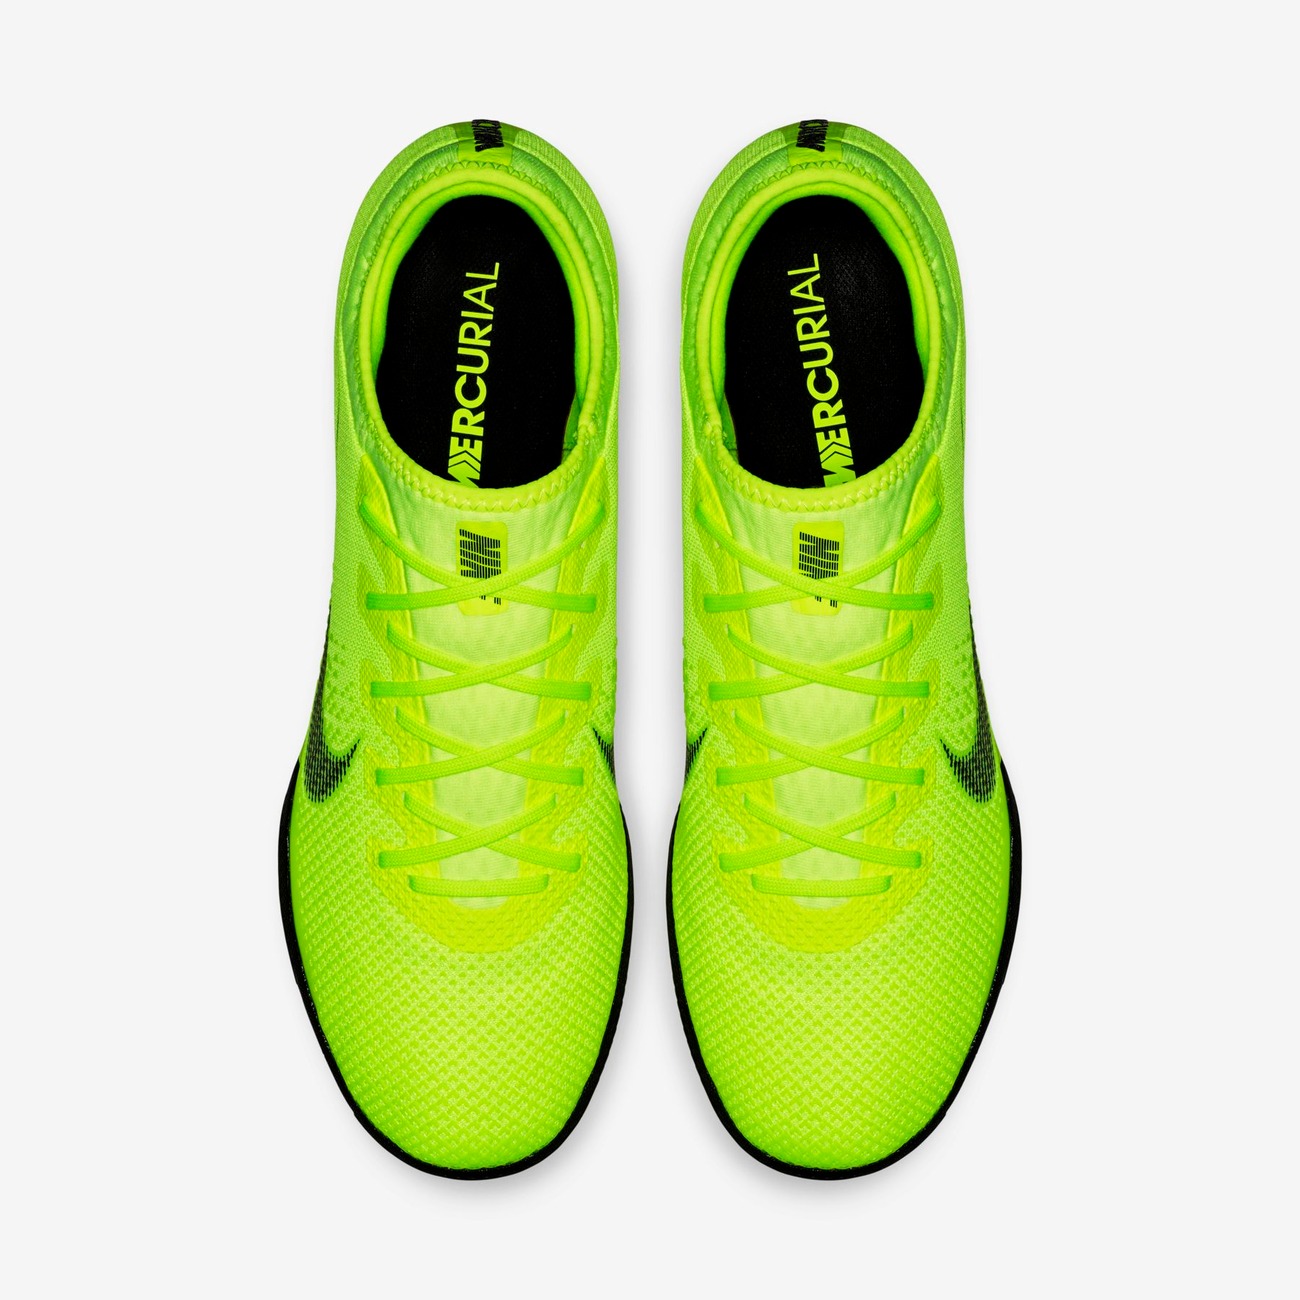 Chuteira Nike Mercurial Vapor XII Pro Unissex - Foto 3